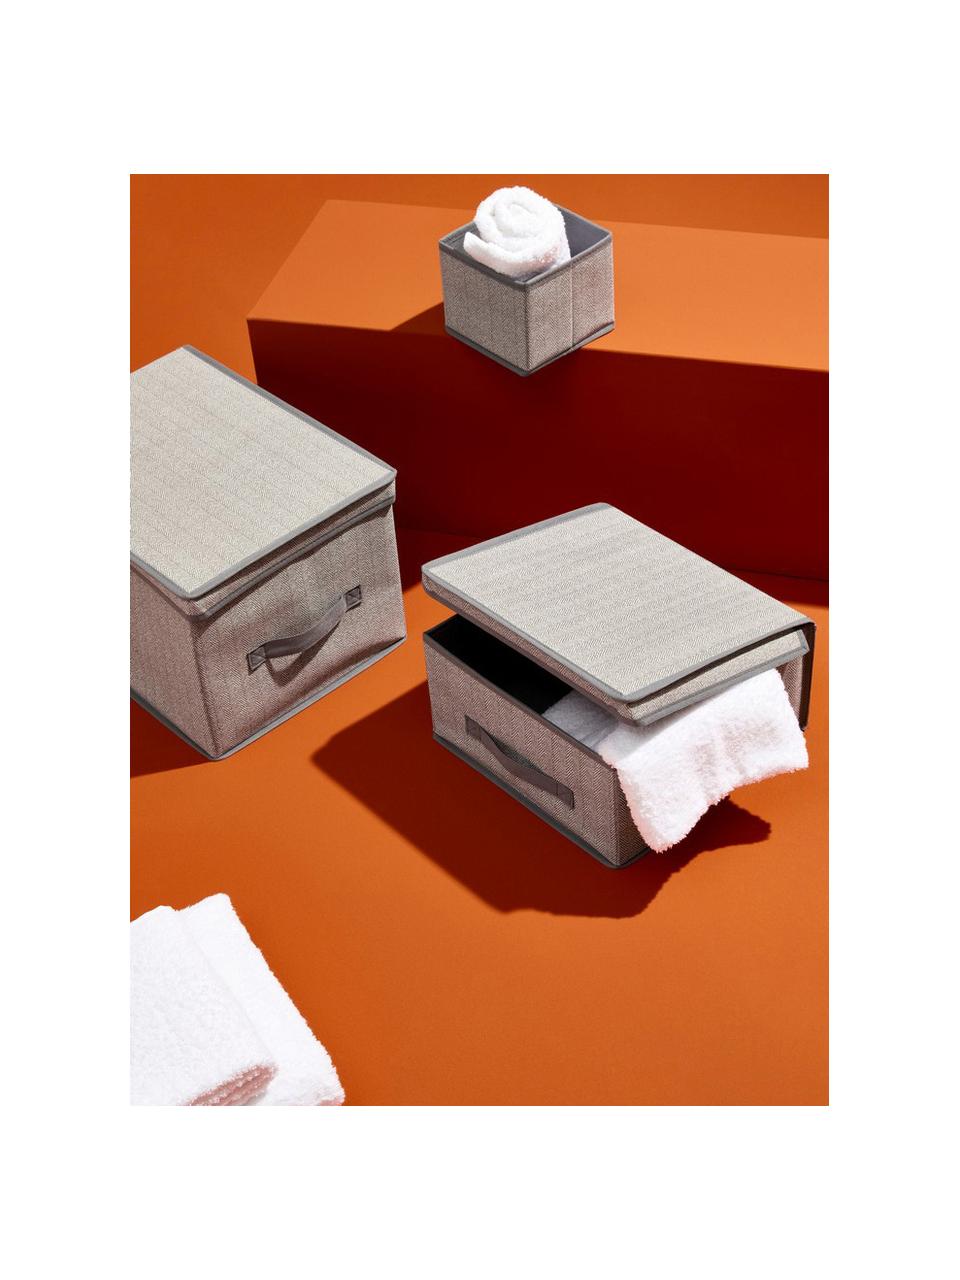 Caja plegable Tidy, An 30 cm, Tapizado: fibra sintética, Tonos grises, An 30 x F 30 cm